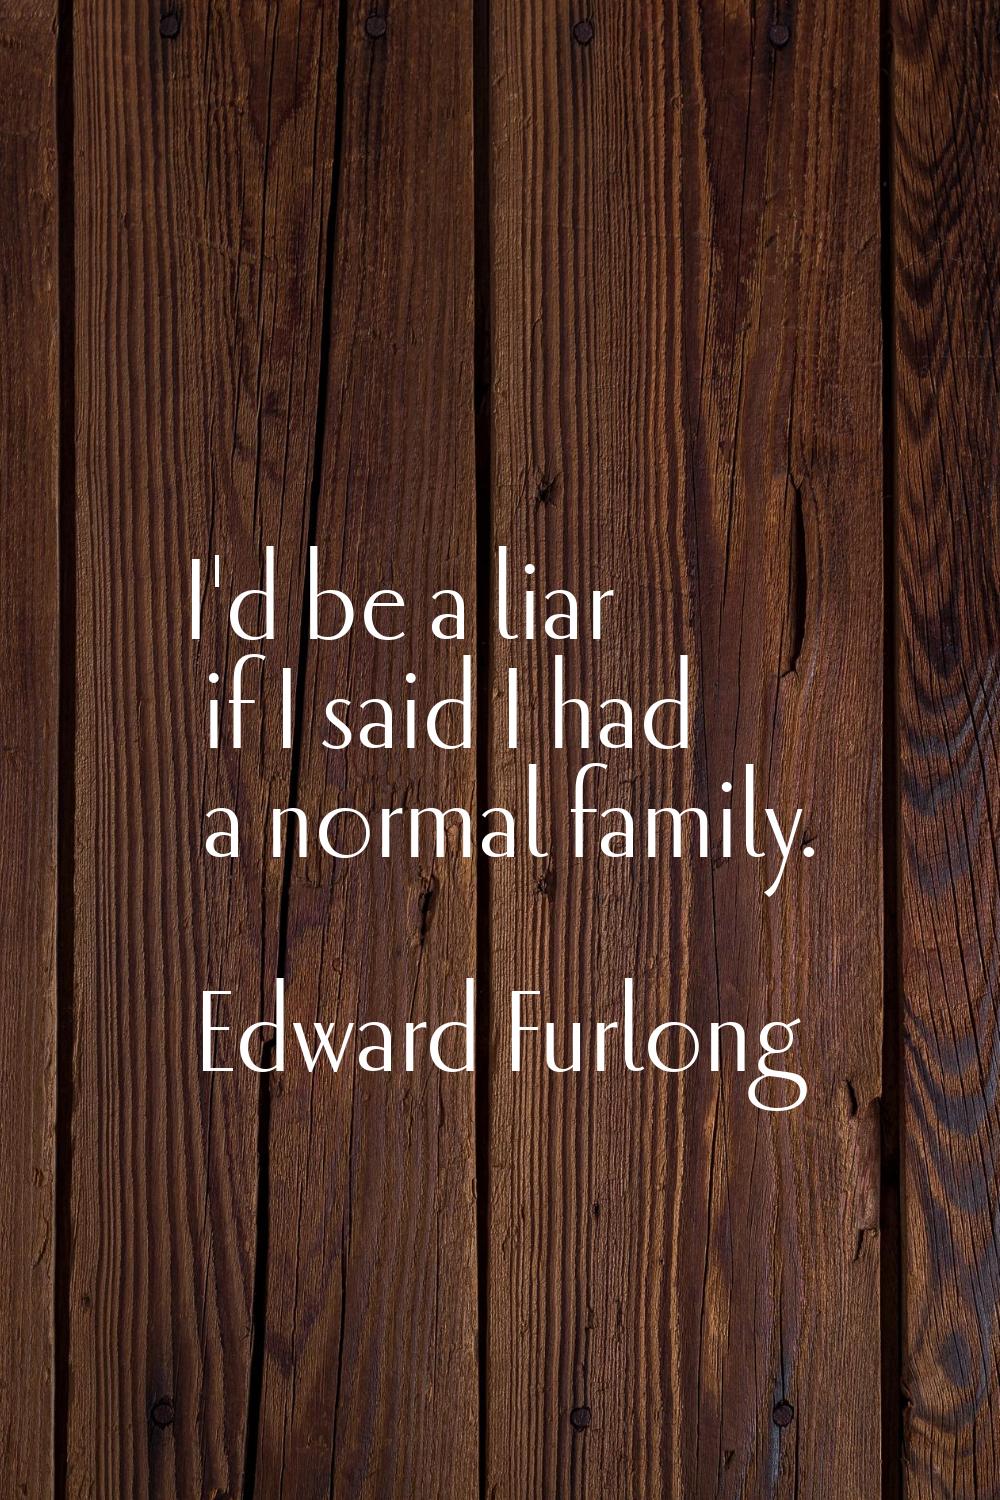 I'd be a liar if I said I had a normal family.